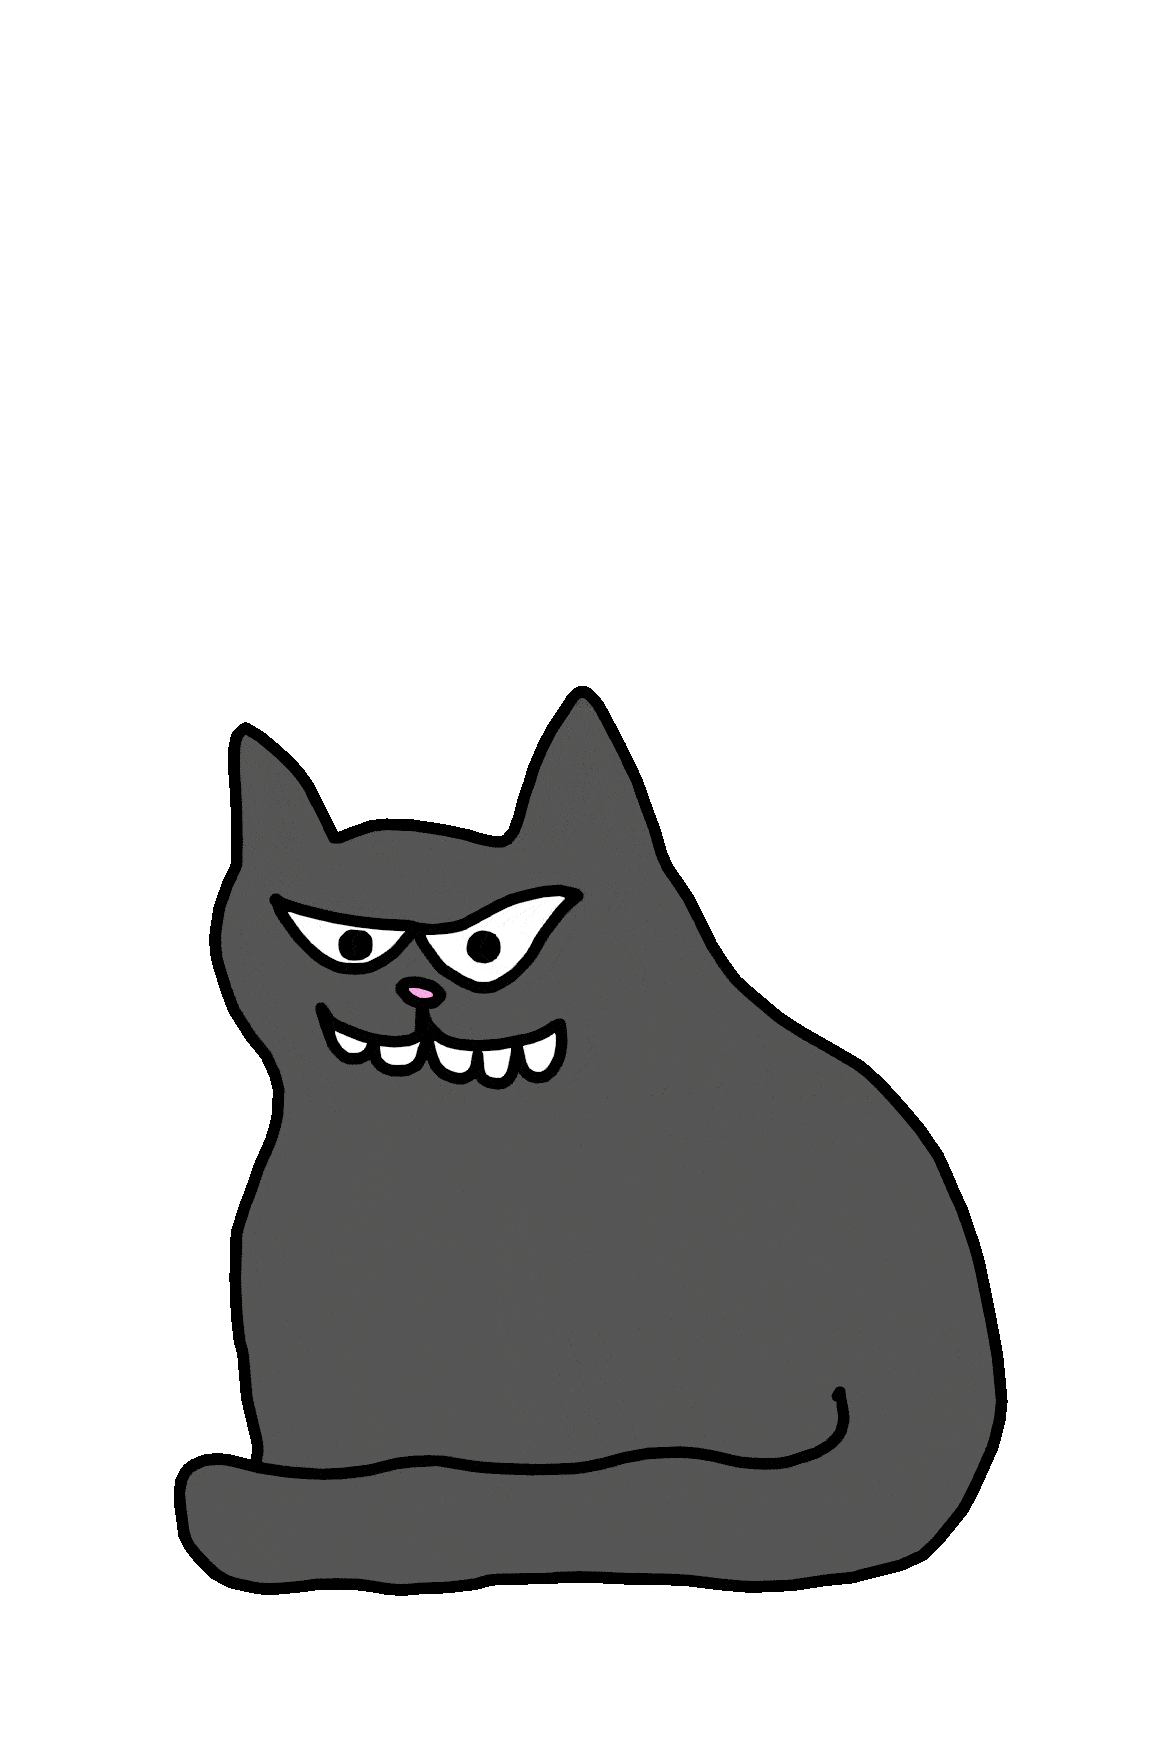 Angry Cat Sticker by wyattbertz